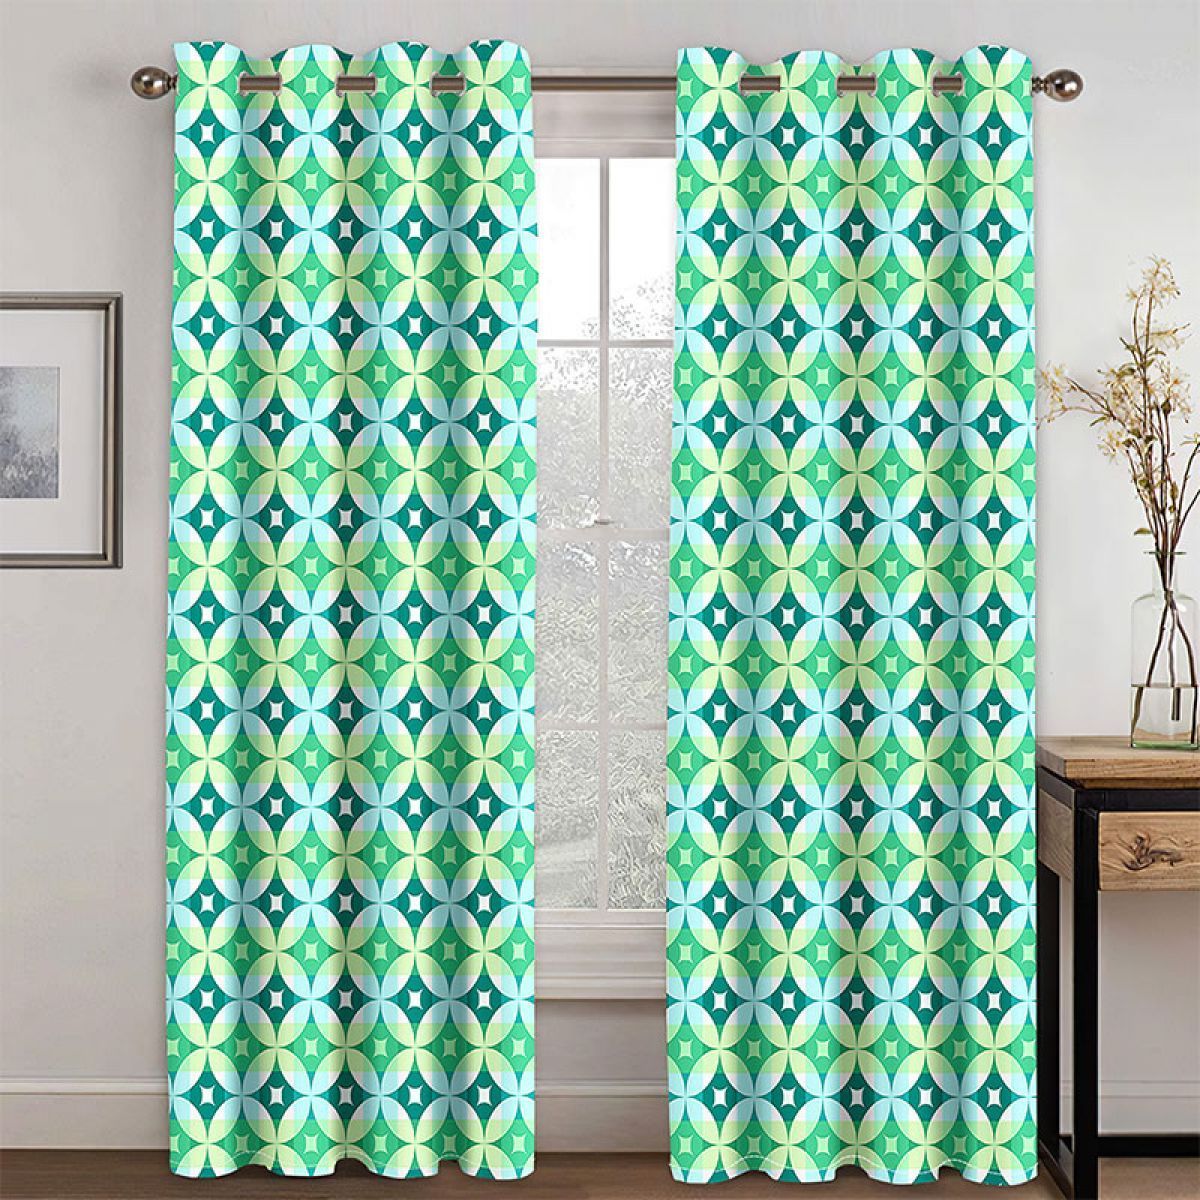 3d White Green Rhombus Printed Window Curtain Home Decor